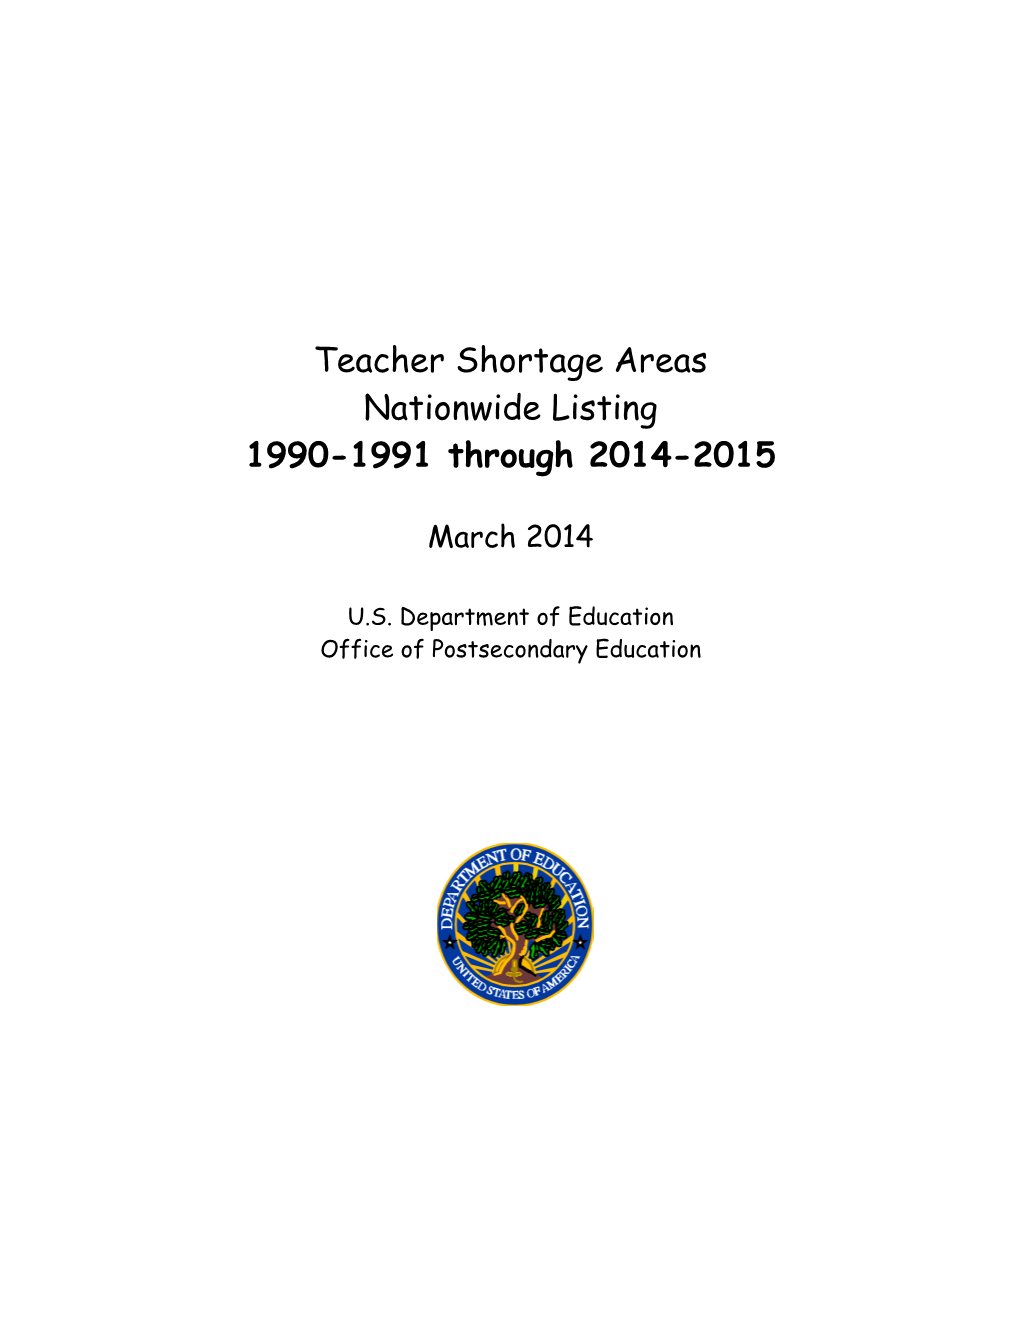 Teacher Shortage Areas Nationwide Listing, 1990-1991 Through 2014-2015 (MS Word)